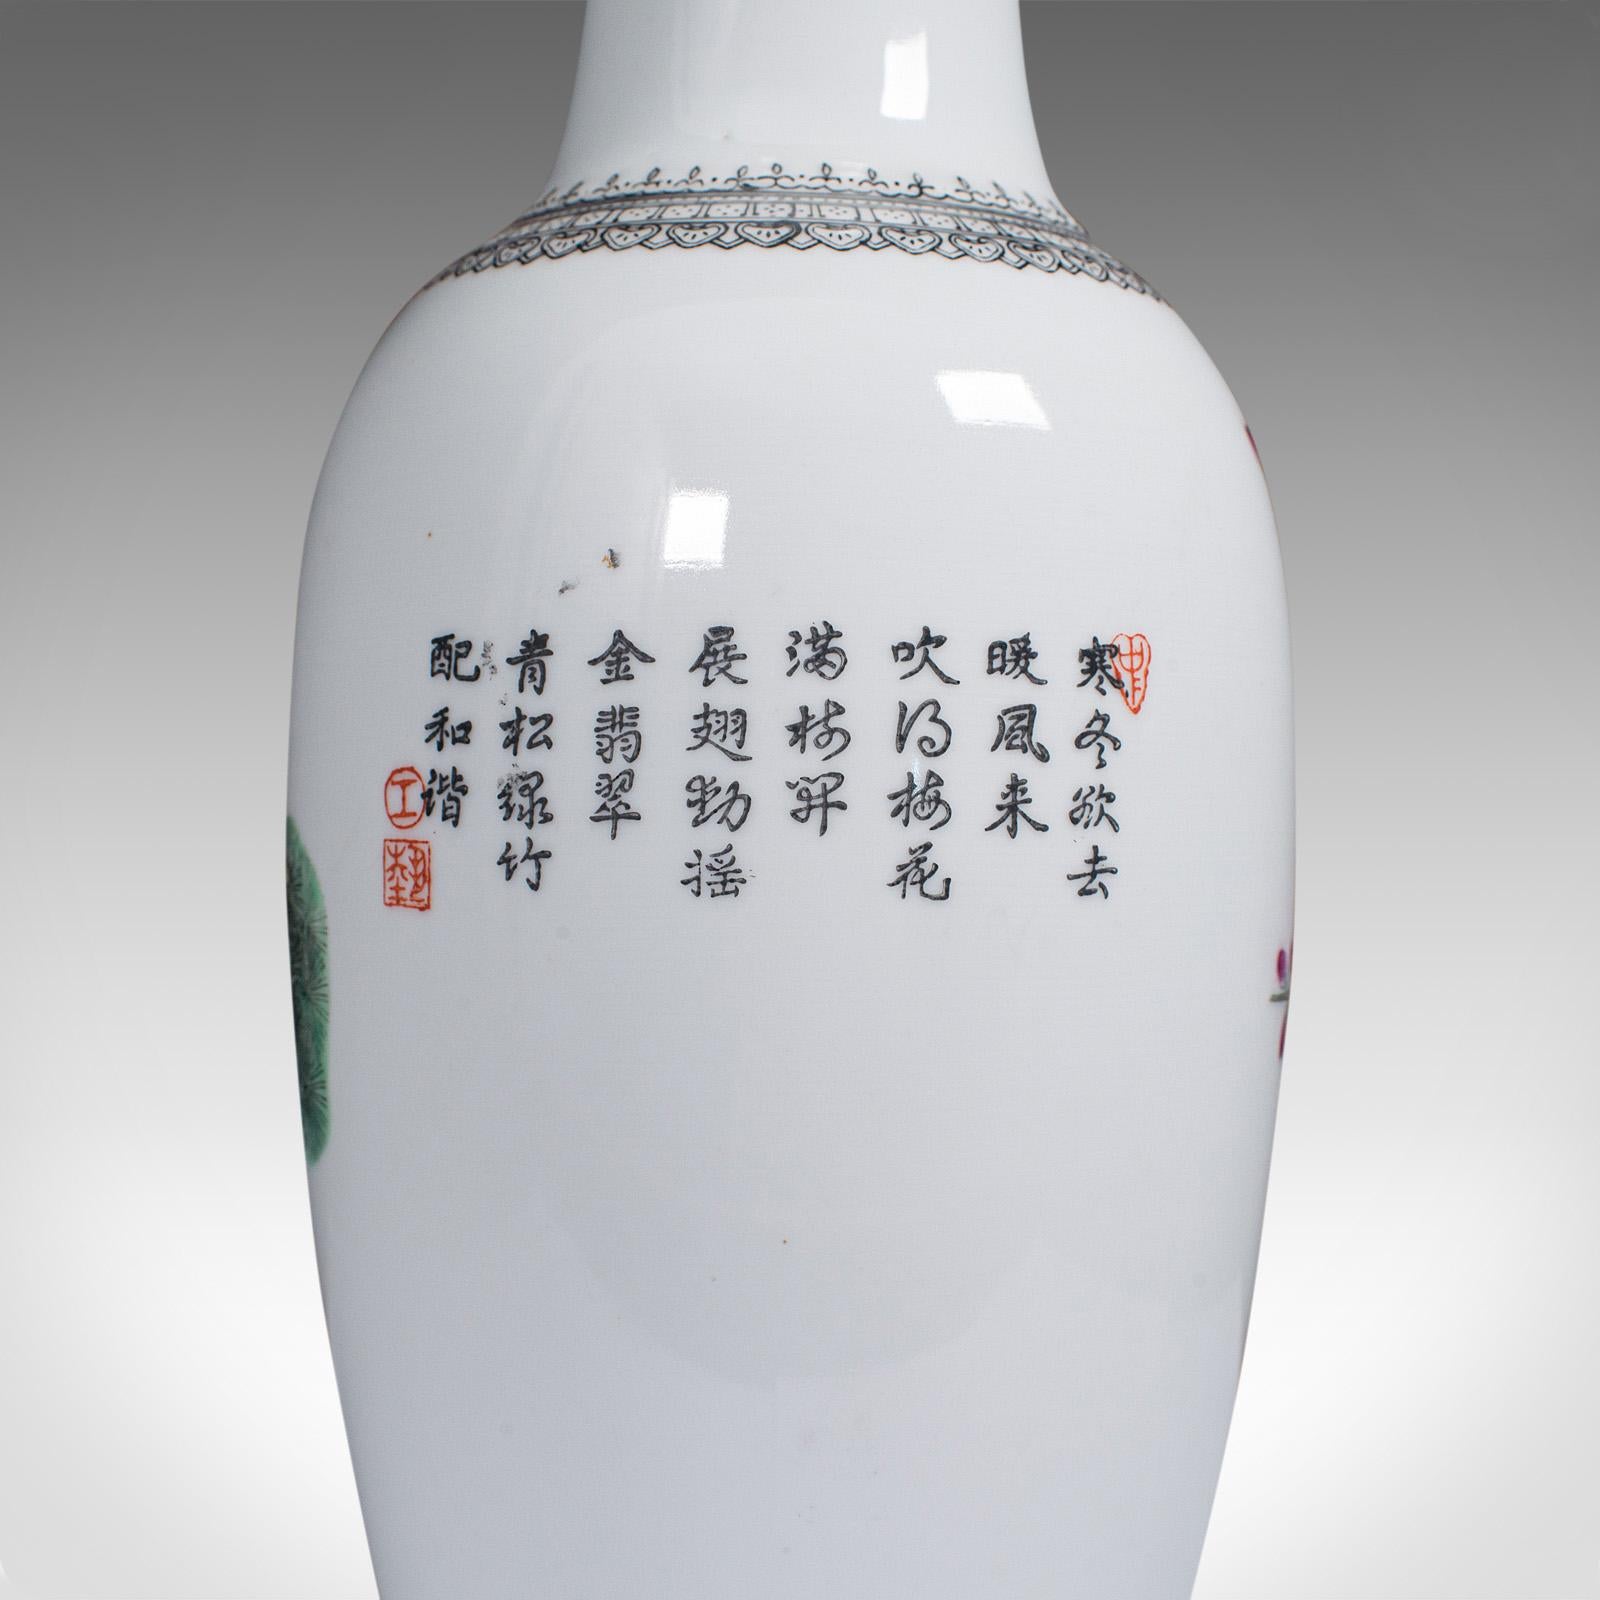 Vintage Flower Vase, Chinese, Ceramic, Decorative Urn, Peacock Motif, circa 1960 For Sale 3